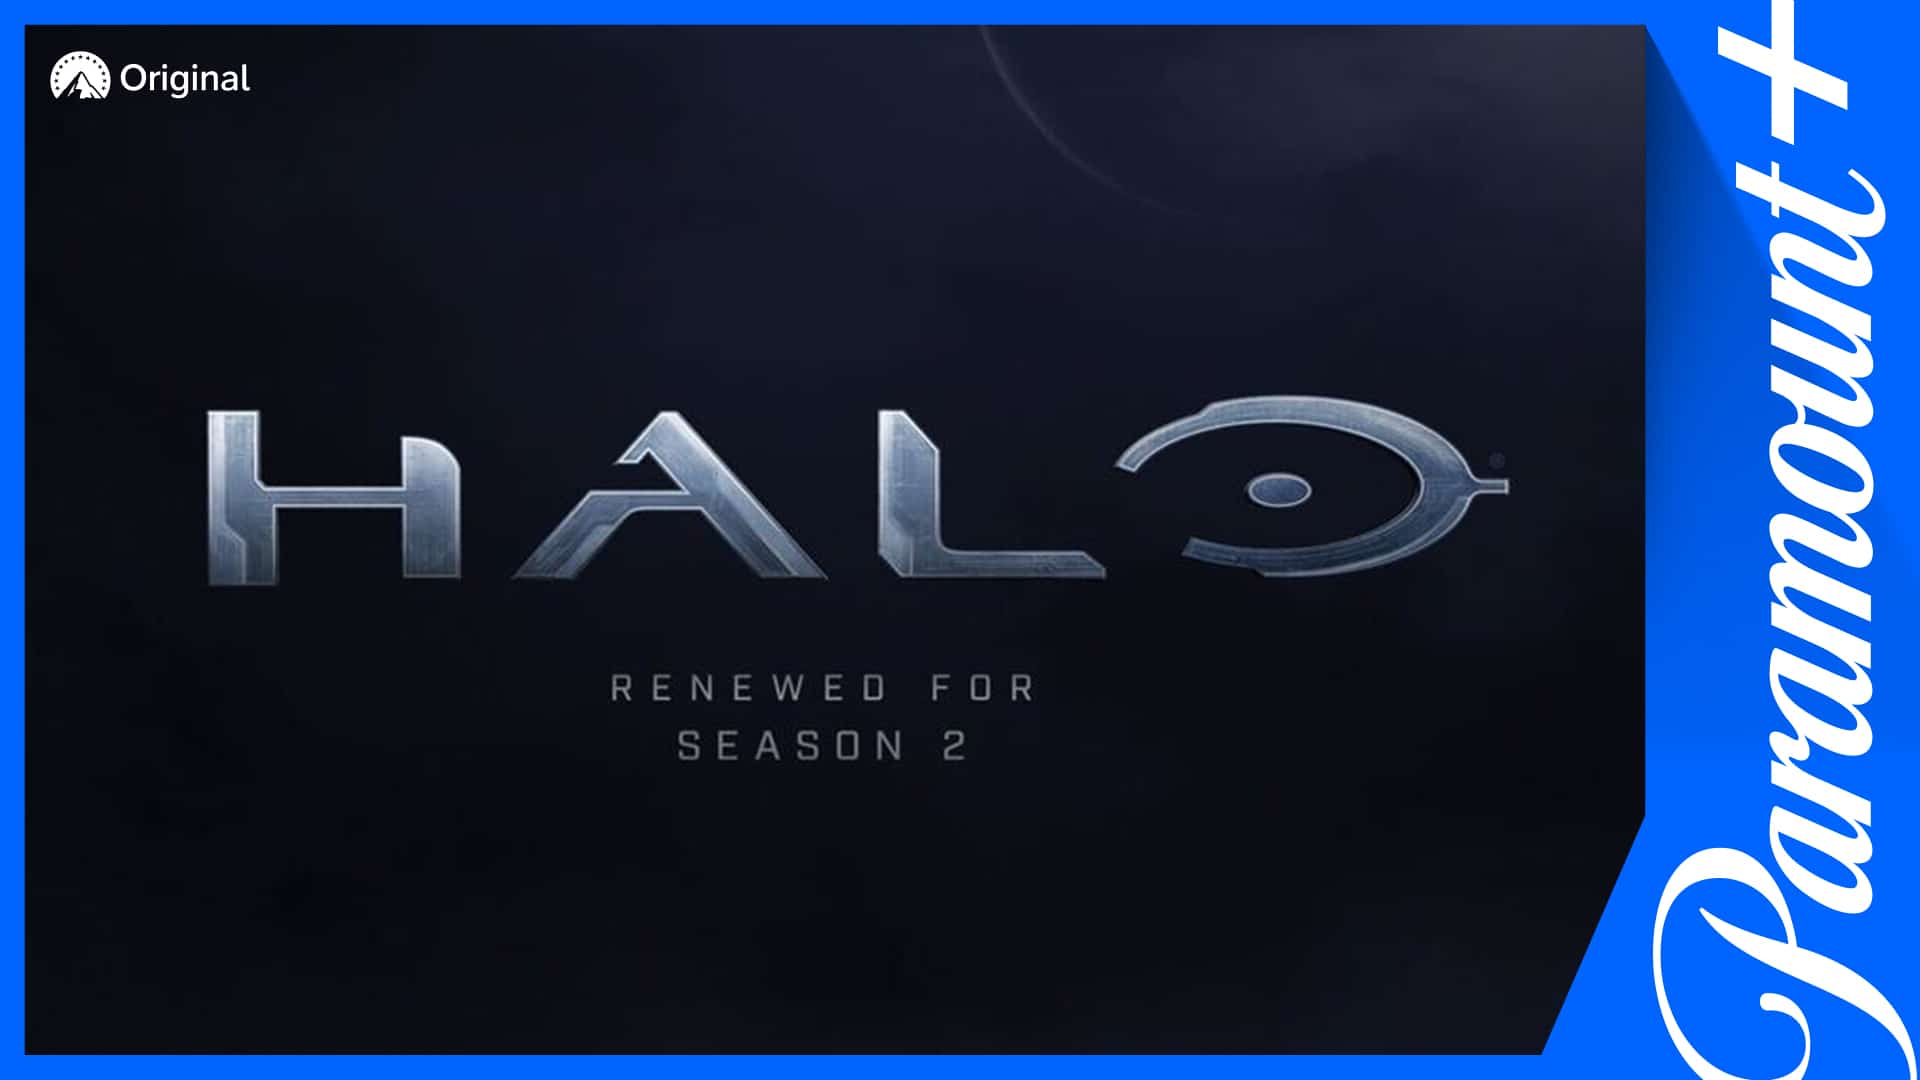 Halo TV series renewed for season 2 by Paramount+